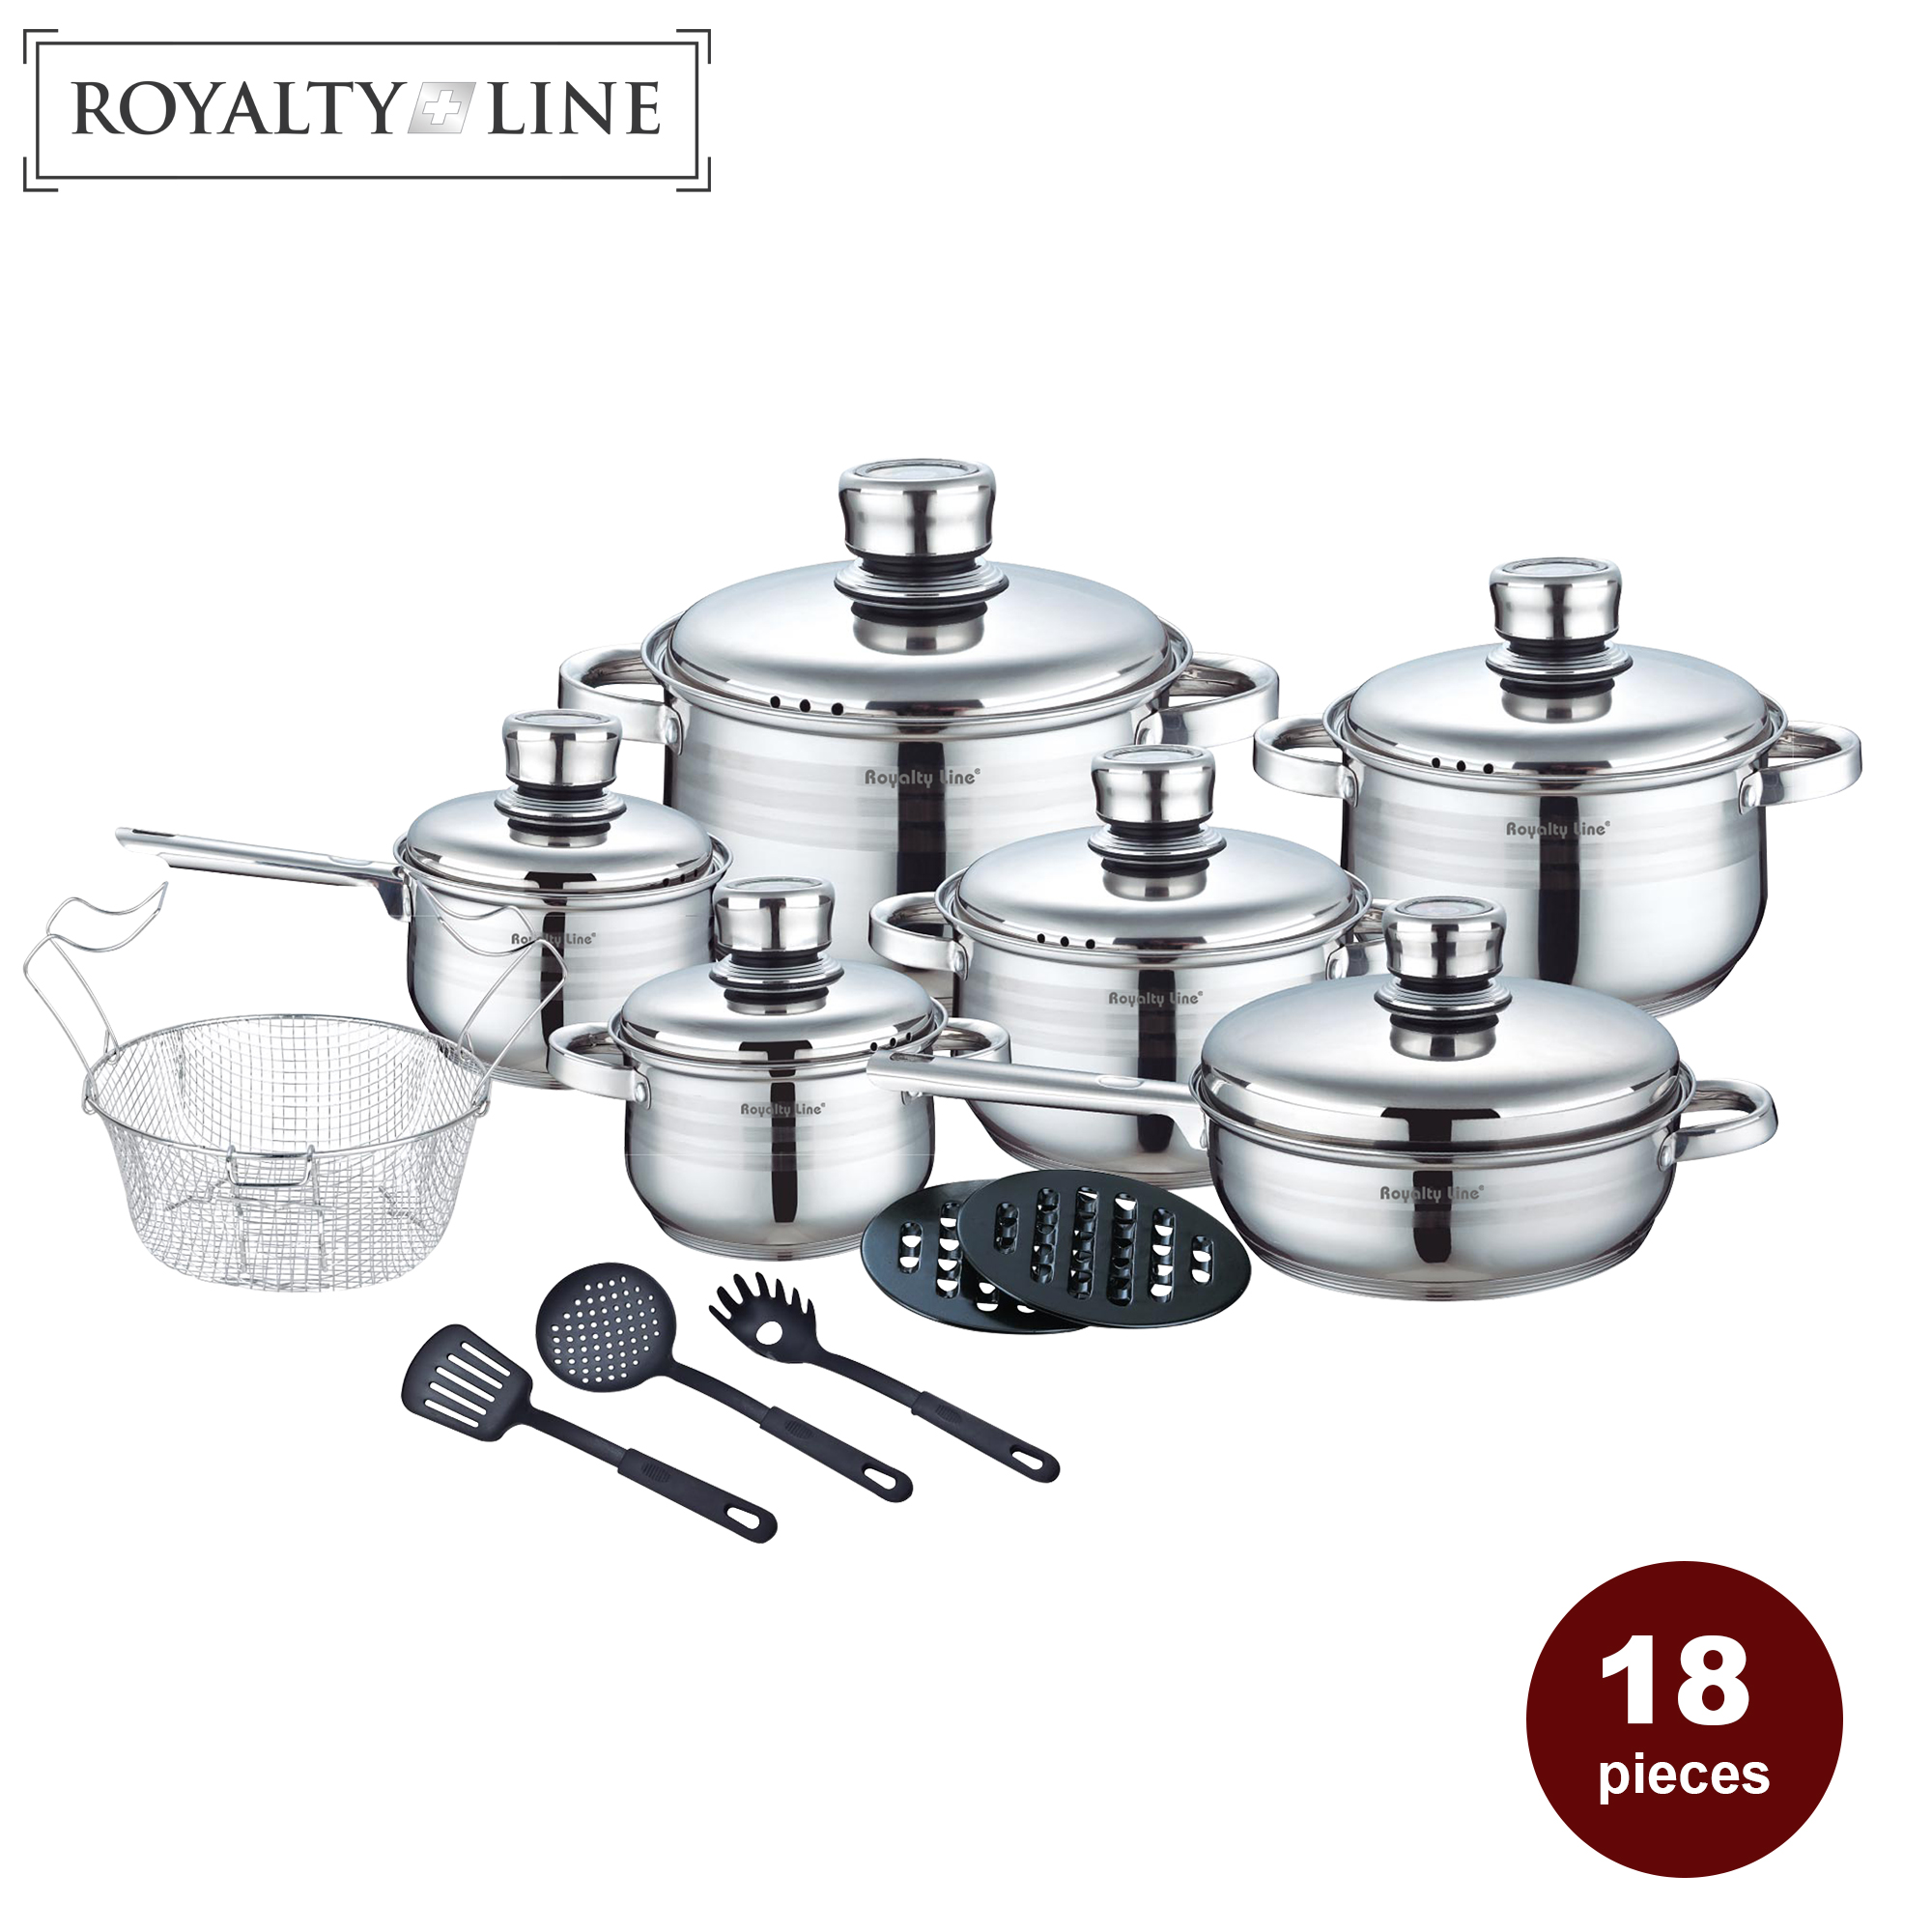 Royalty Line RL-1802; Casseroles en acier inoxydable, ustensiles de cuisine, 18 pièces